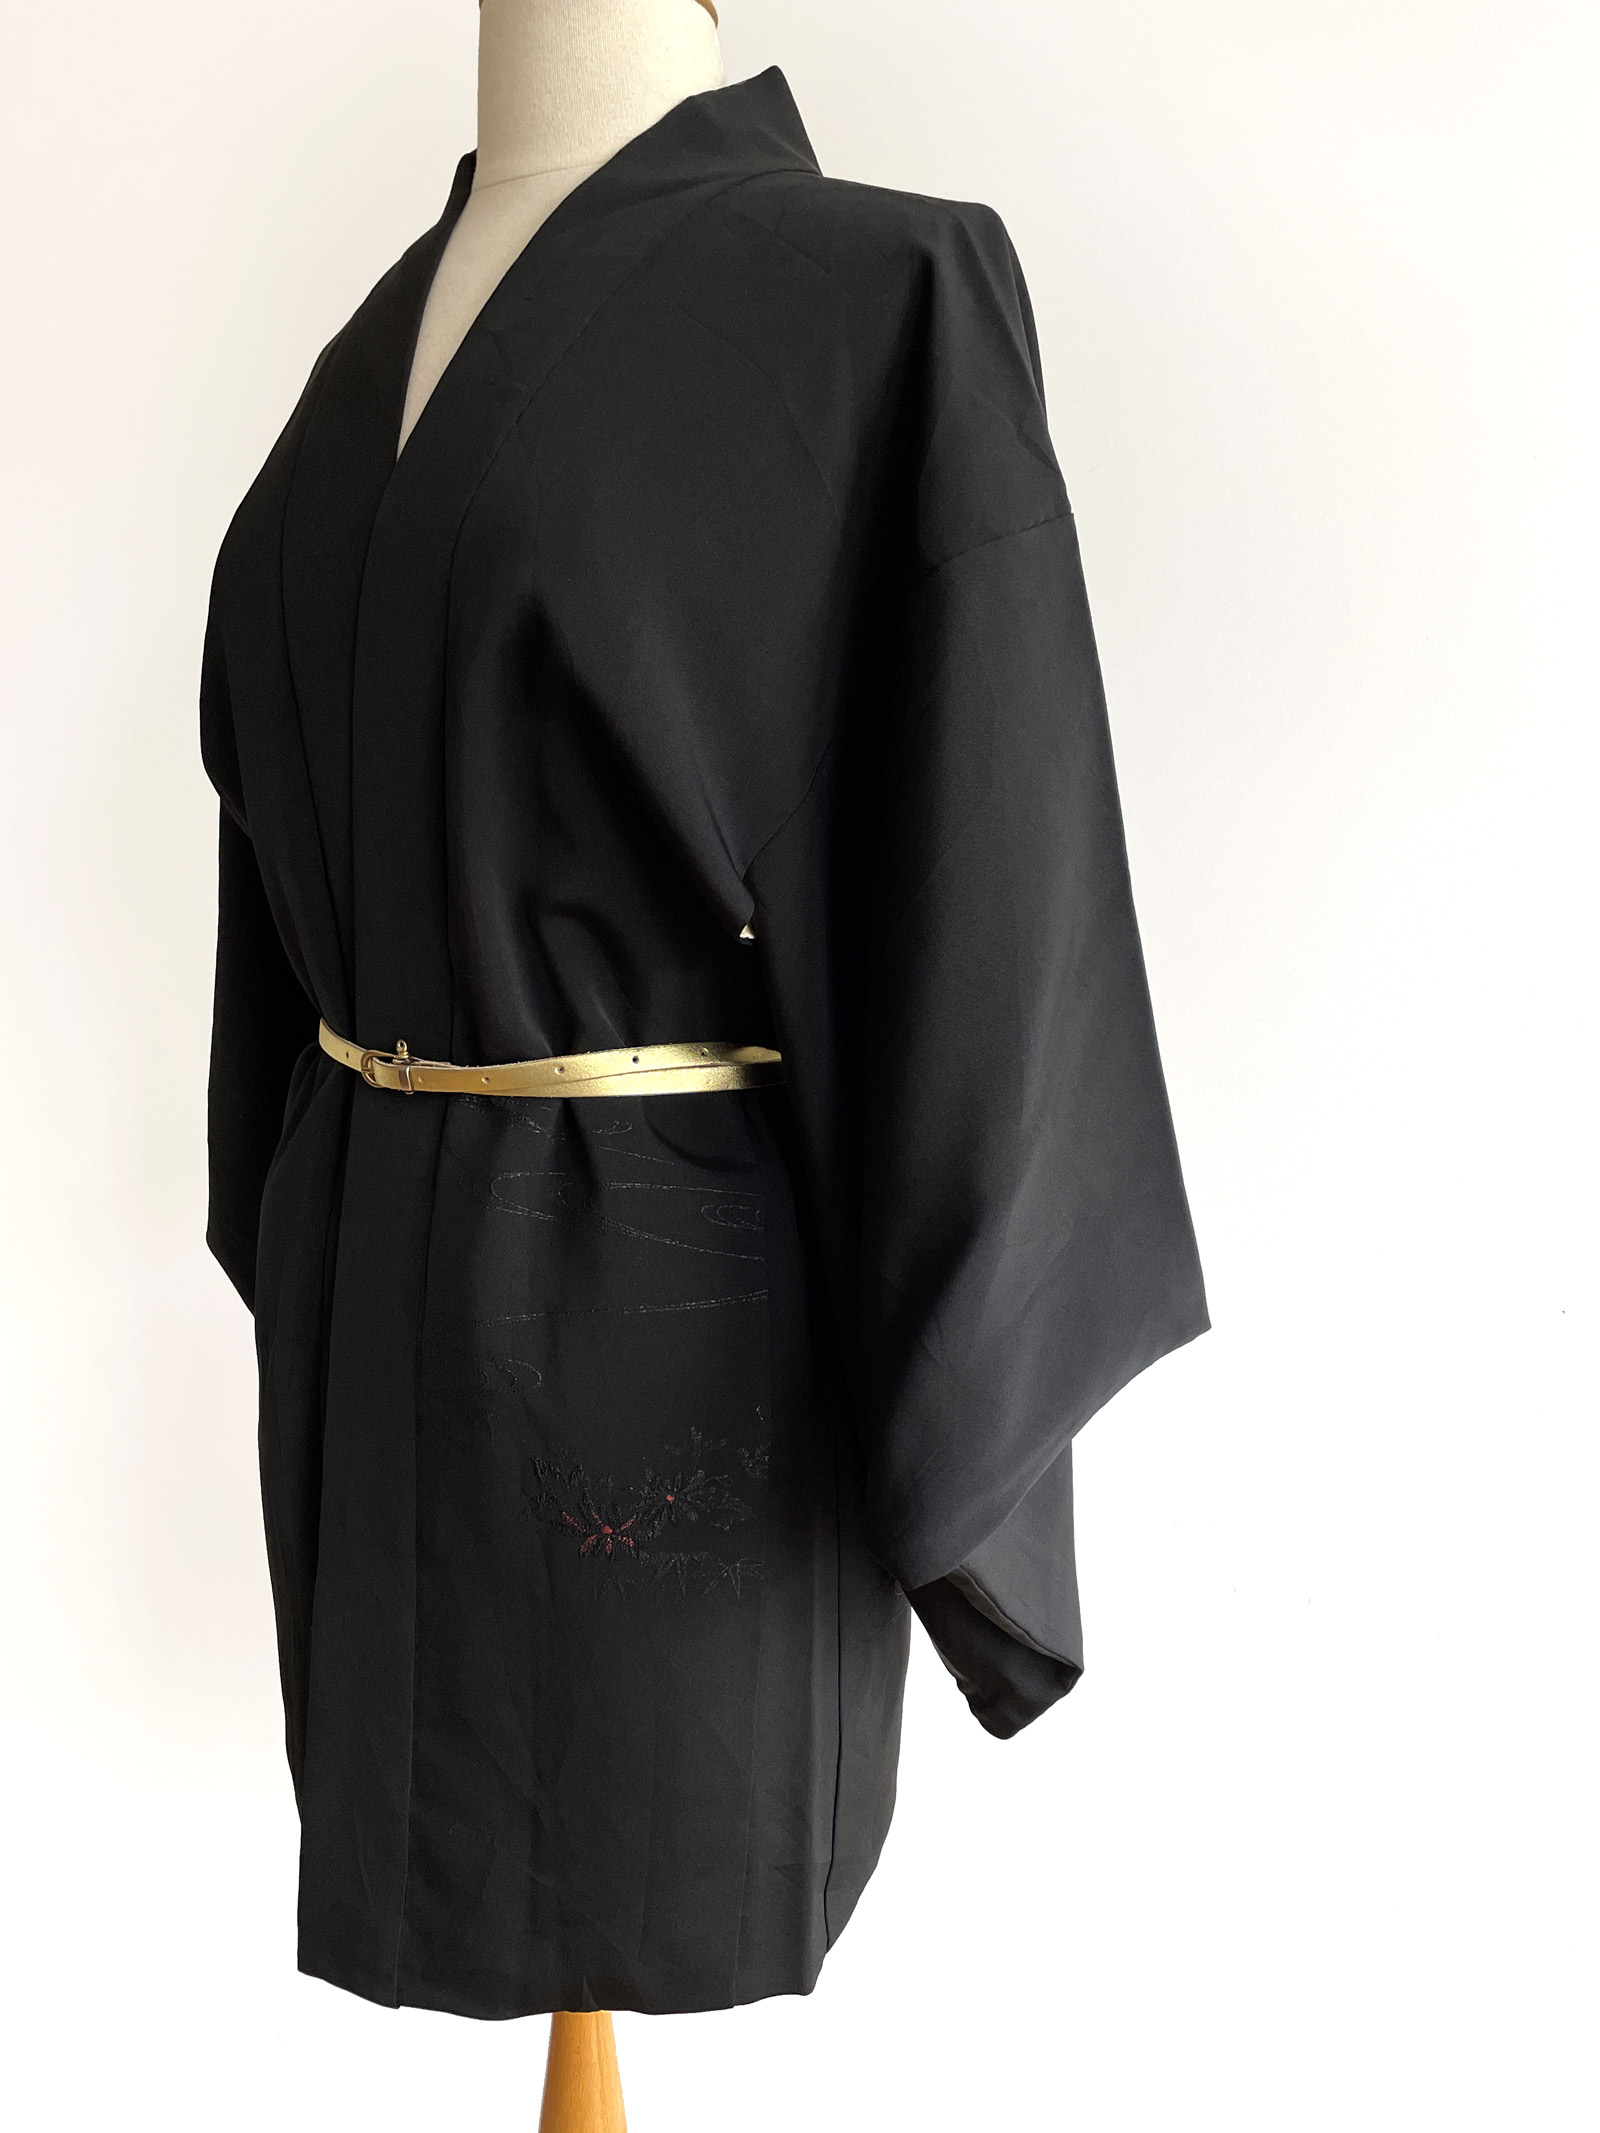 Sensai – chic Kimono jacket with subtle shiny details